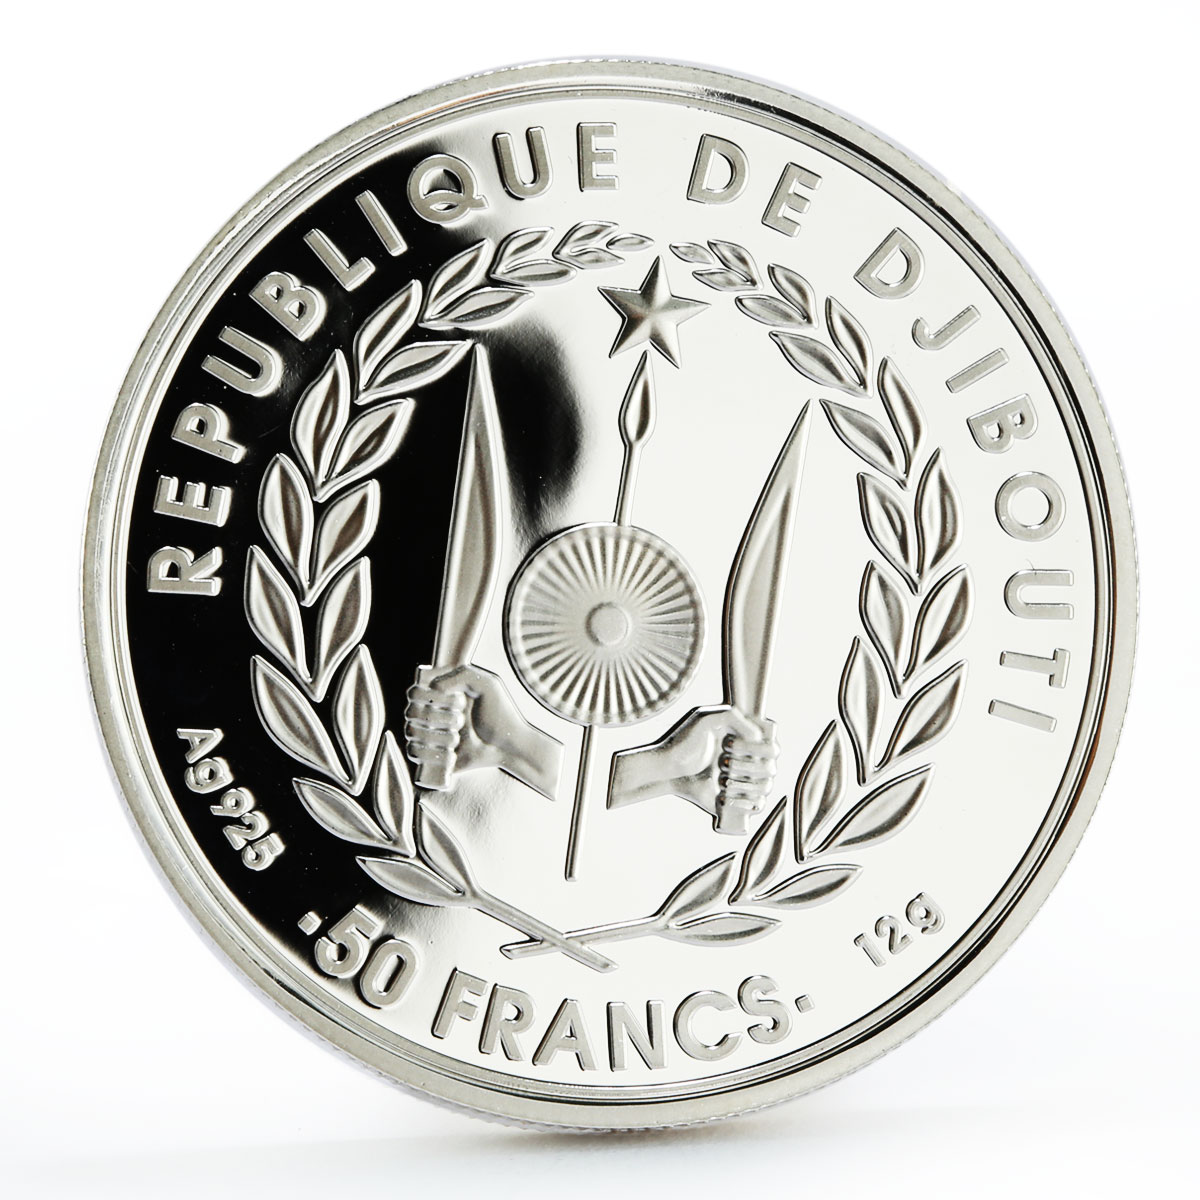 Djibouti 50 francs Tour de France Cycling White Jersey colored silver coin 2018